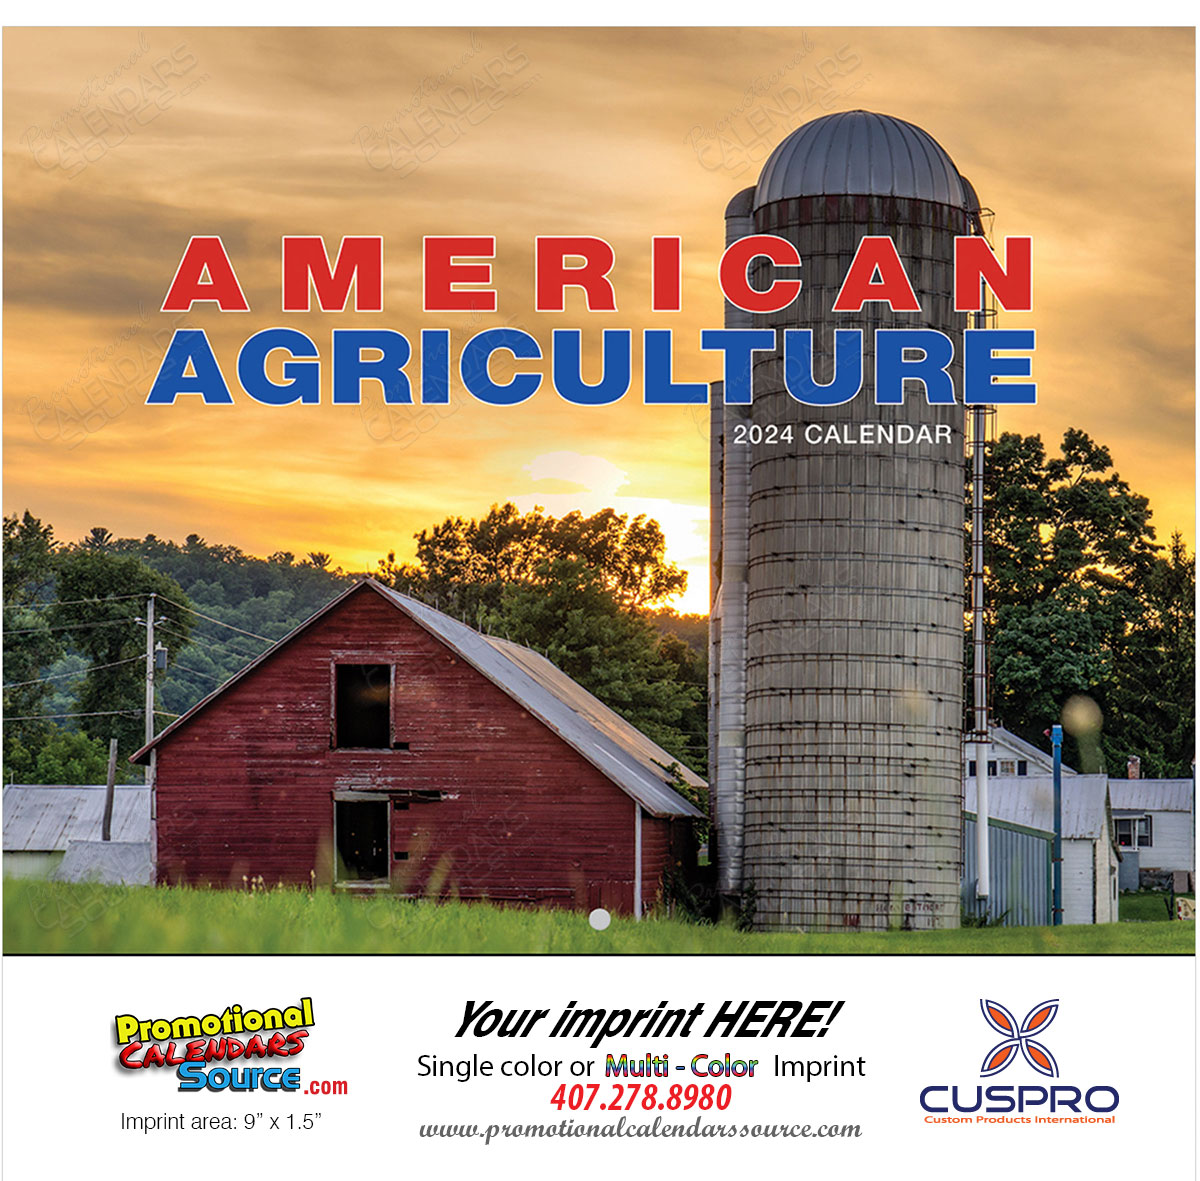 American Agriculture Promotional Calendar 